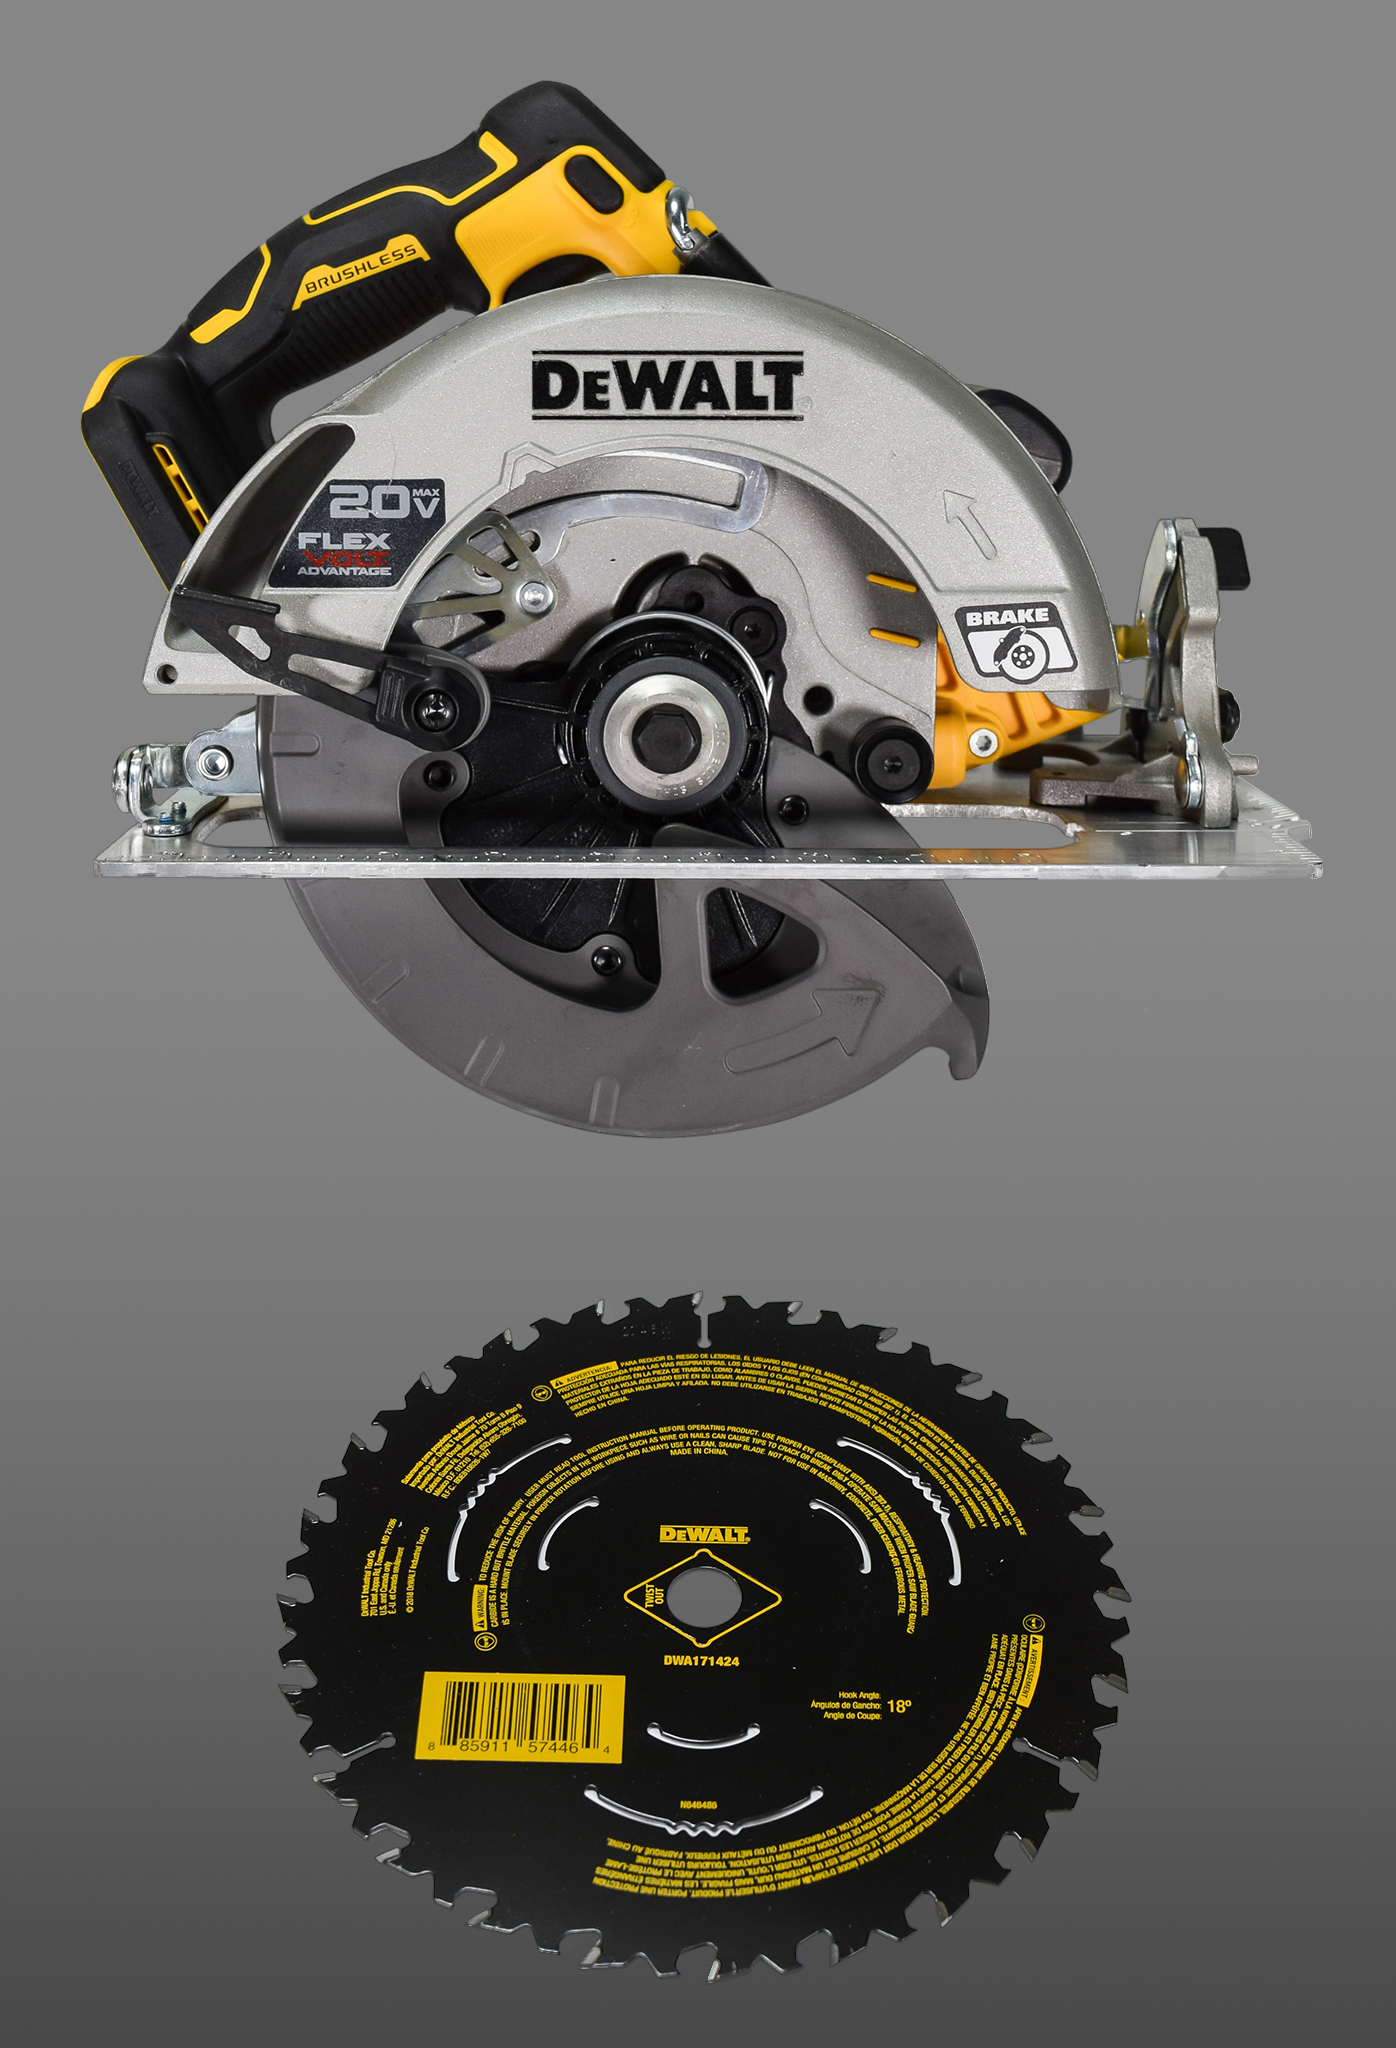 Dewalt デウォルト FLEXVOLT ADVANTAGE 20V MAX* Circular Saw, 7-1/4-Inch,  Cordless, Tool Only (DCS573B)